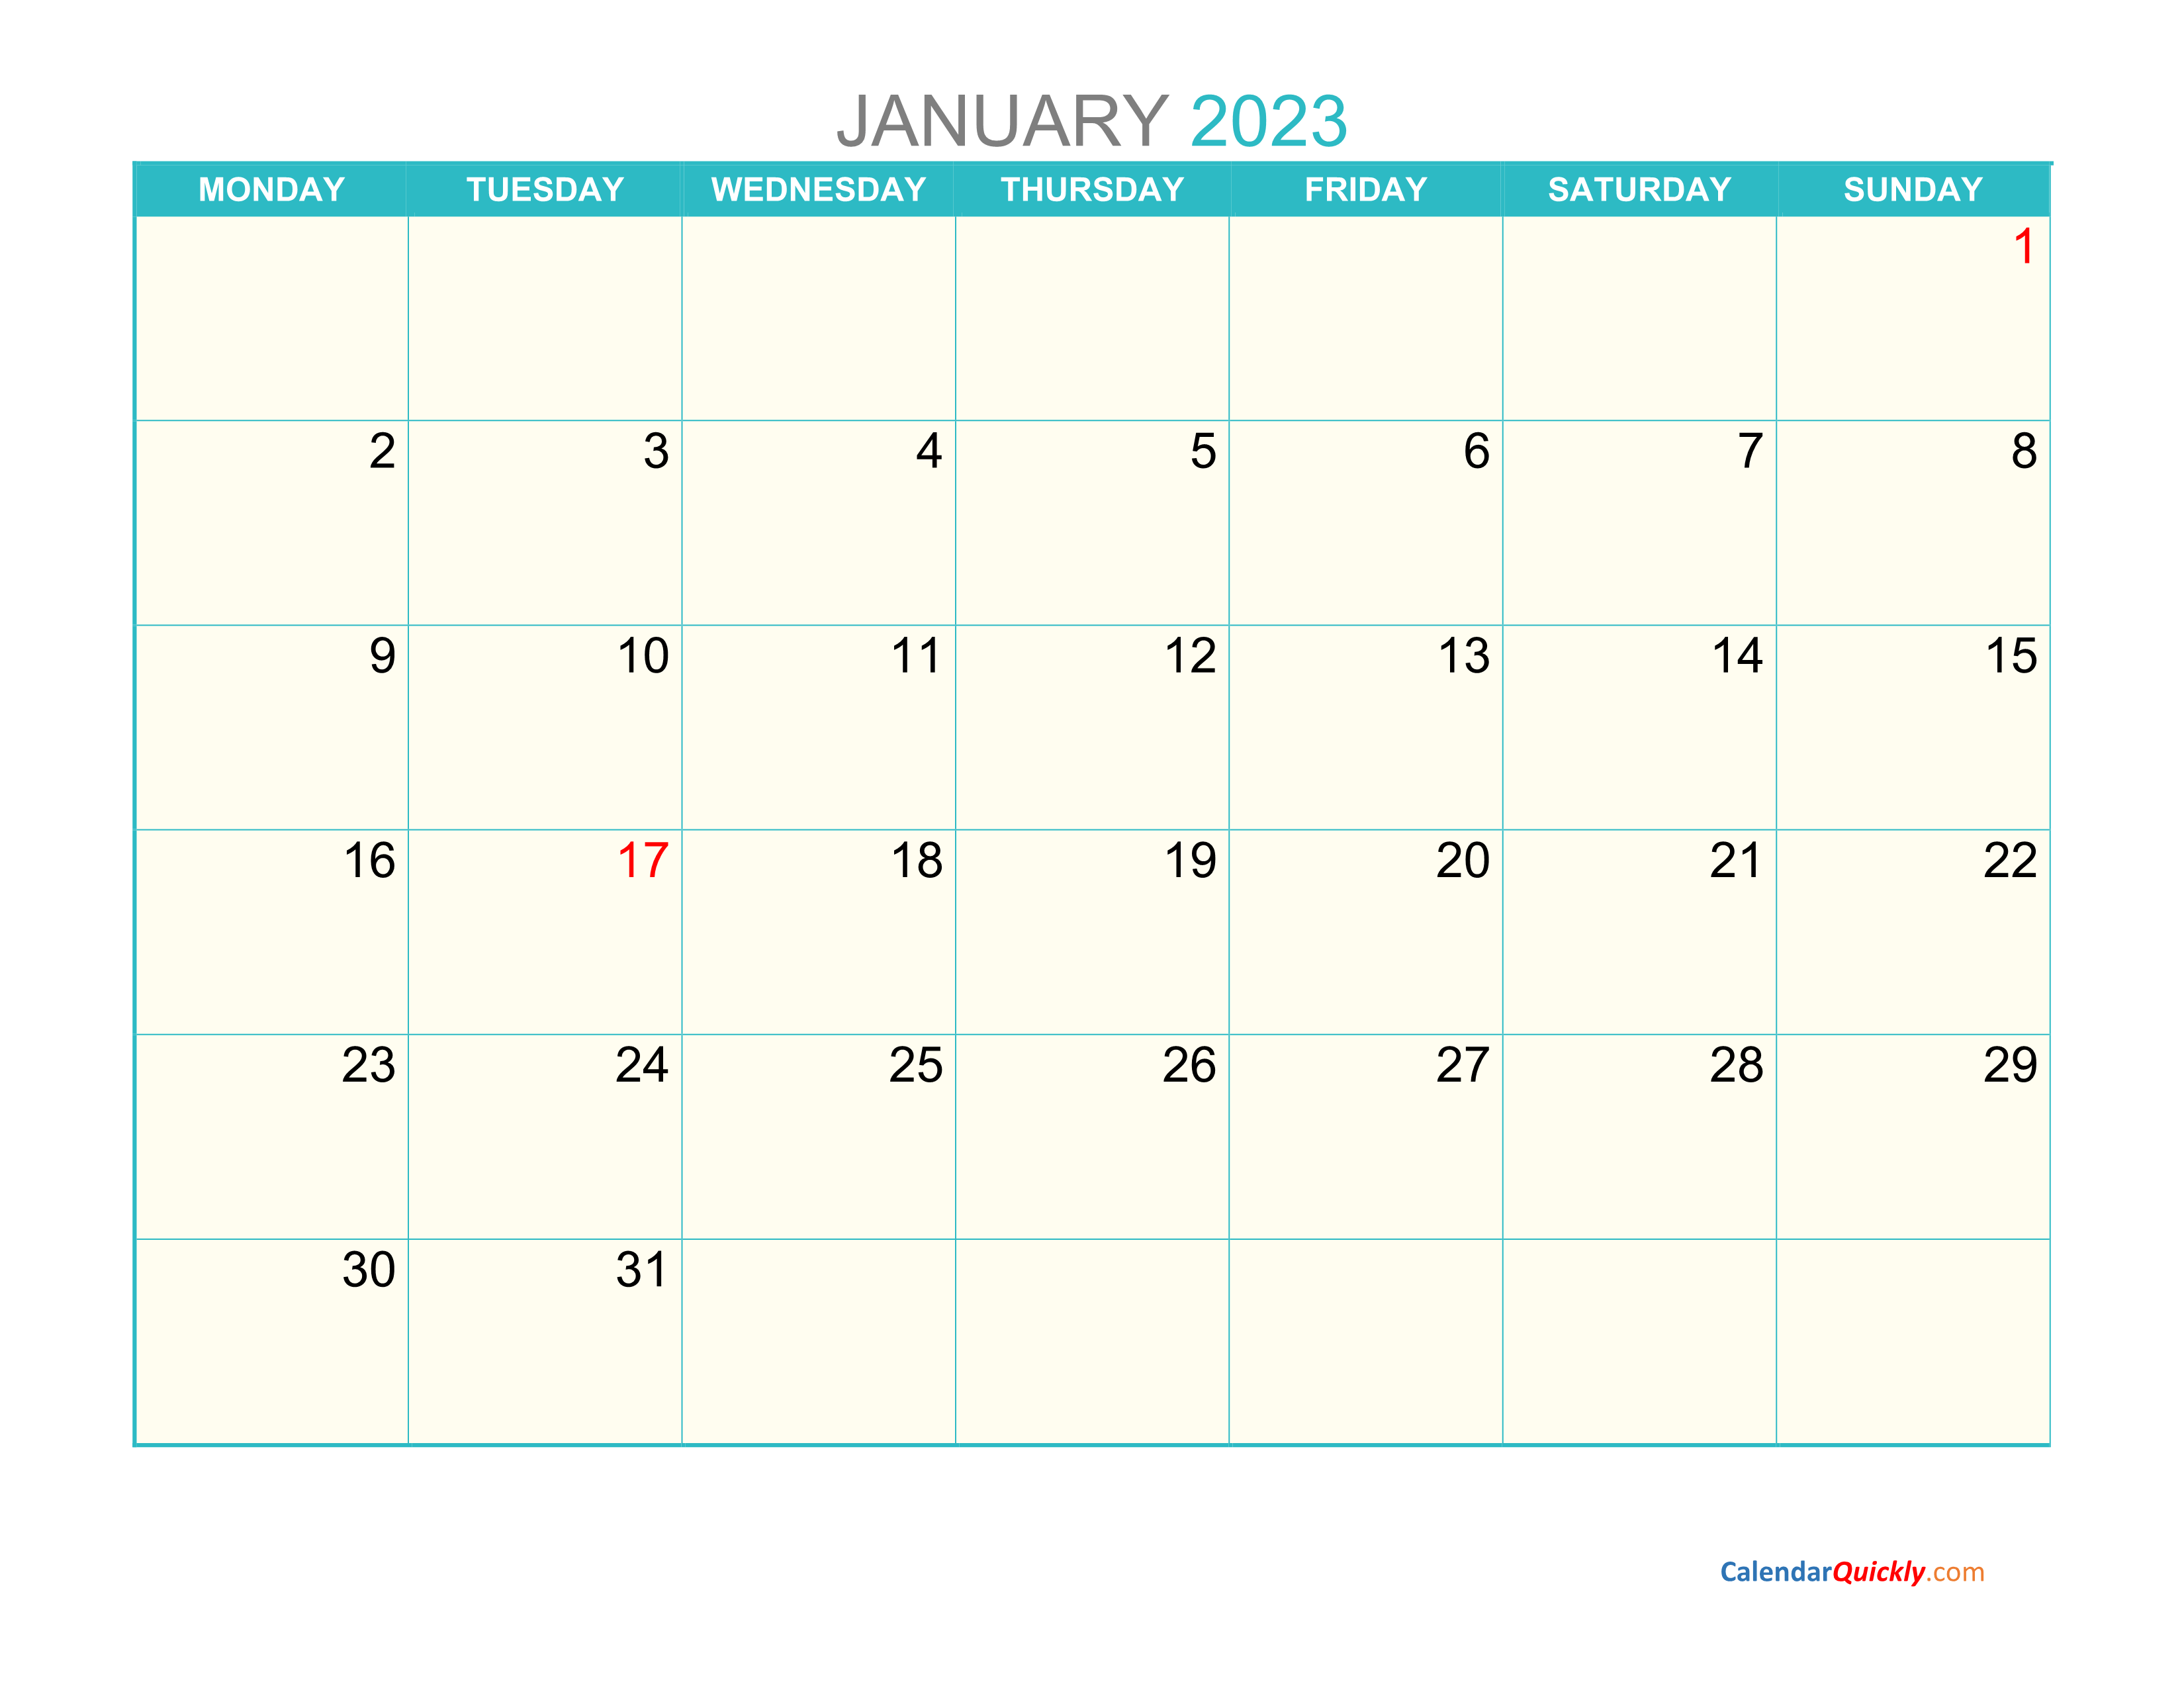 2023-calendar-calendar-quickly-riset